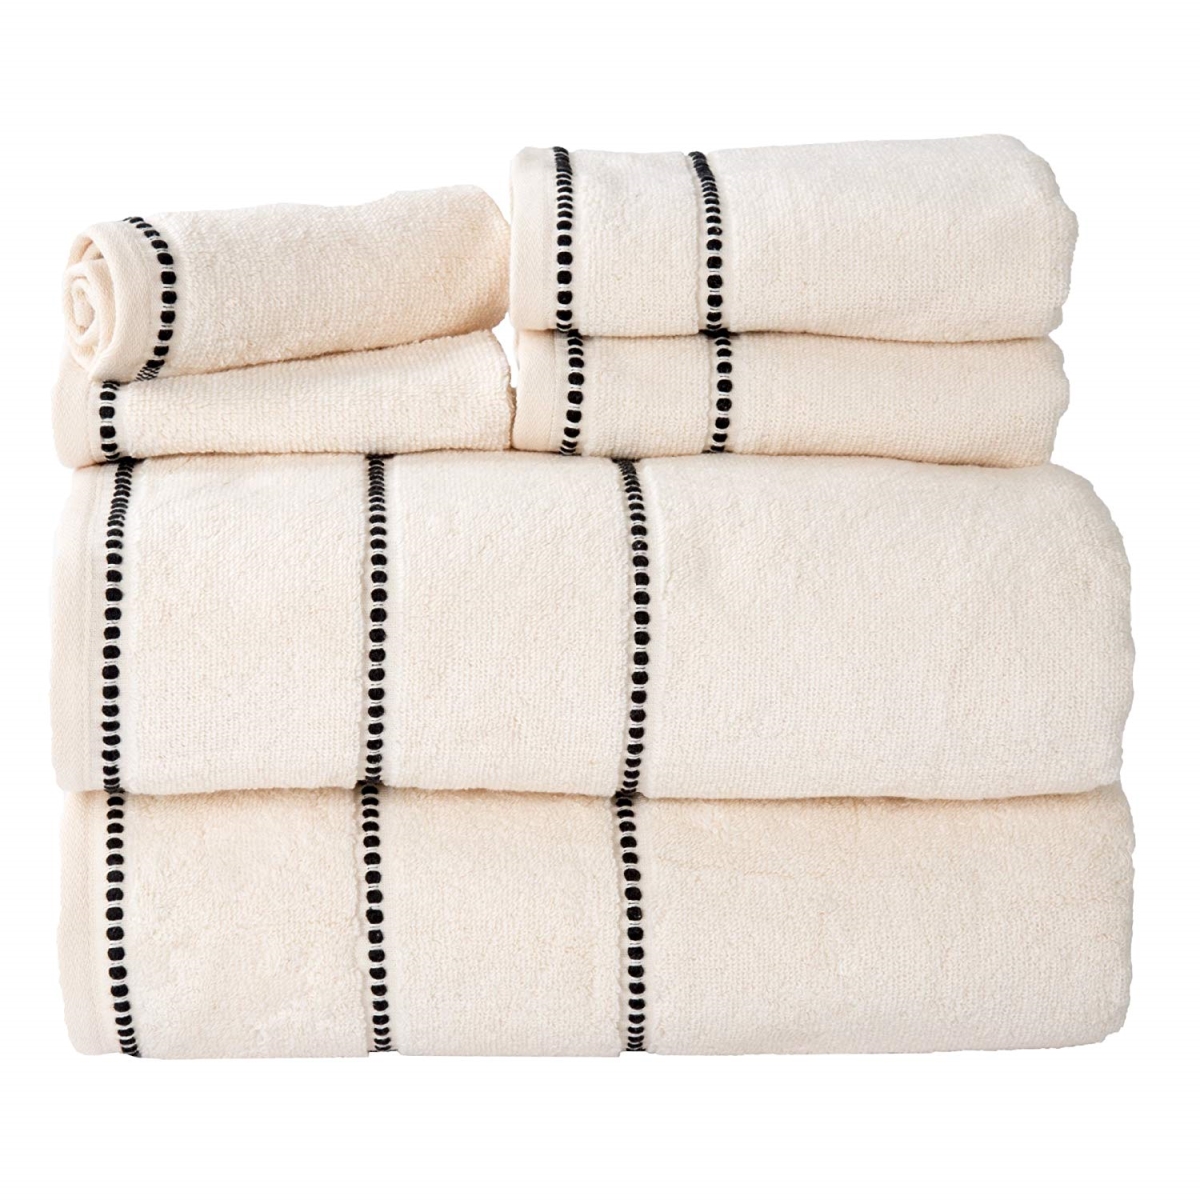 Picture of Bedford Home 67A-76887 Quick Dry 100 Percent Cotton Zero Twist 6 Piece Towel Set - Bone